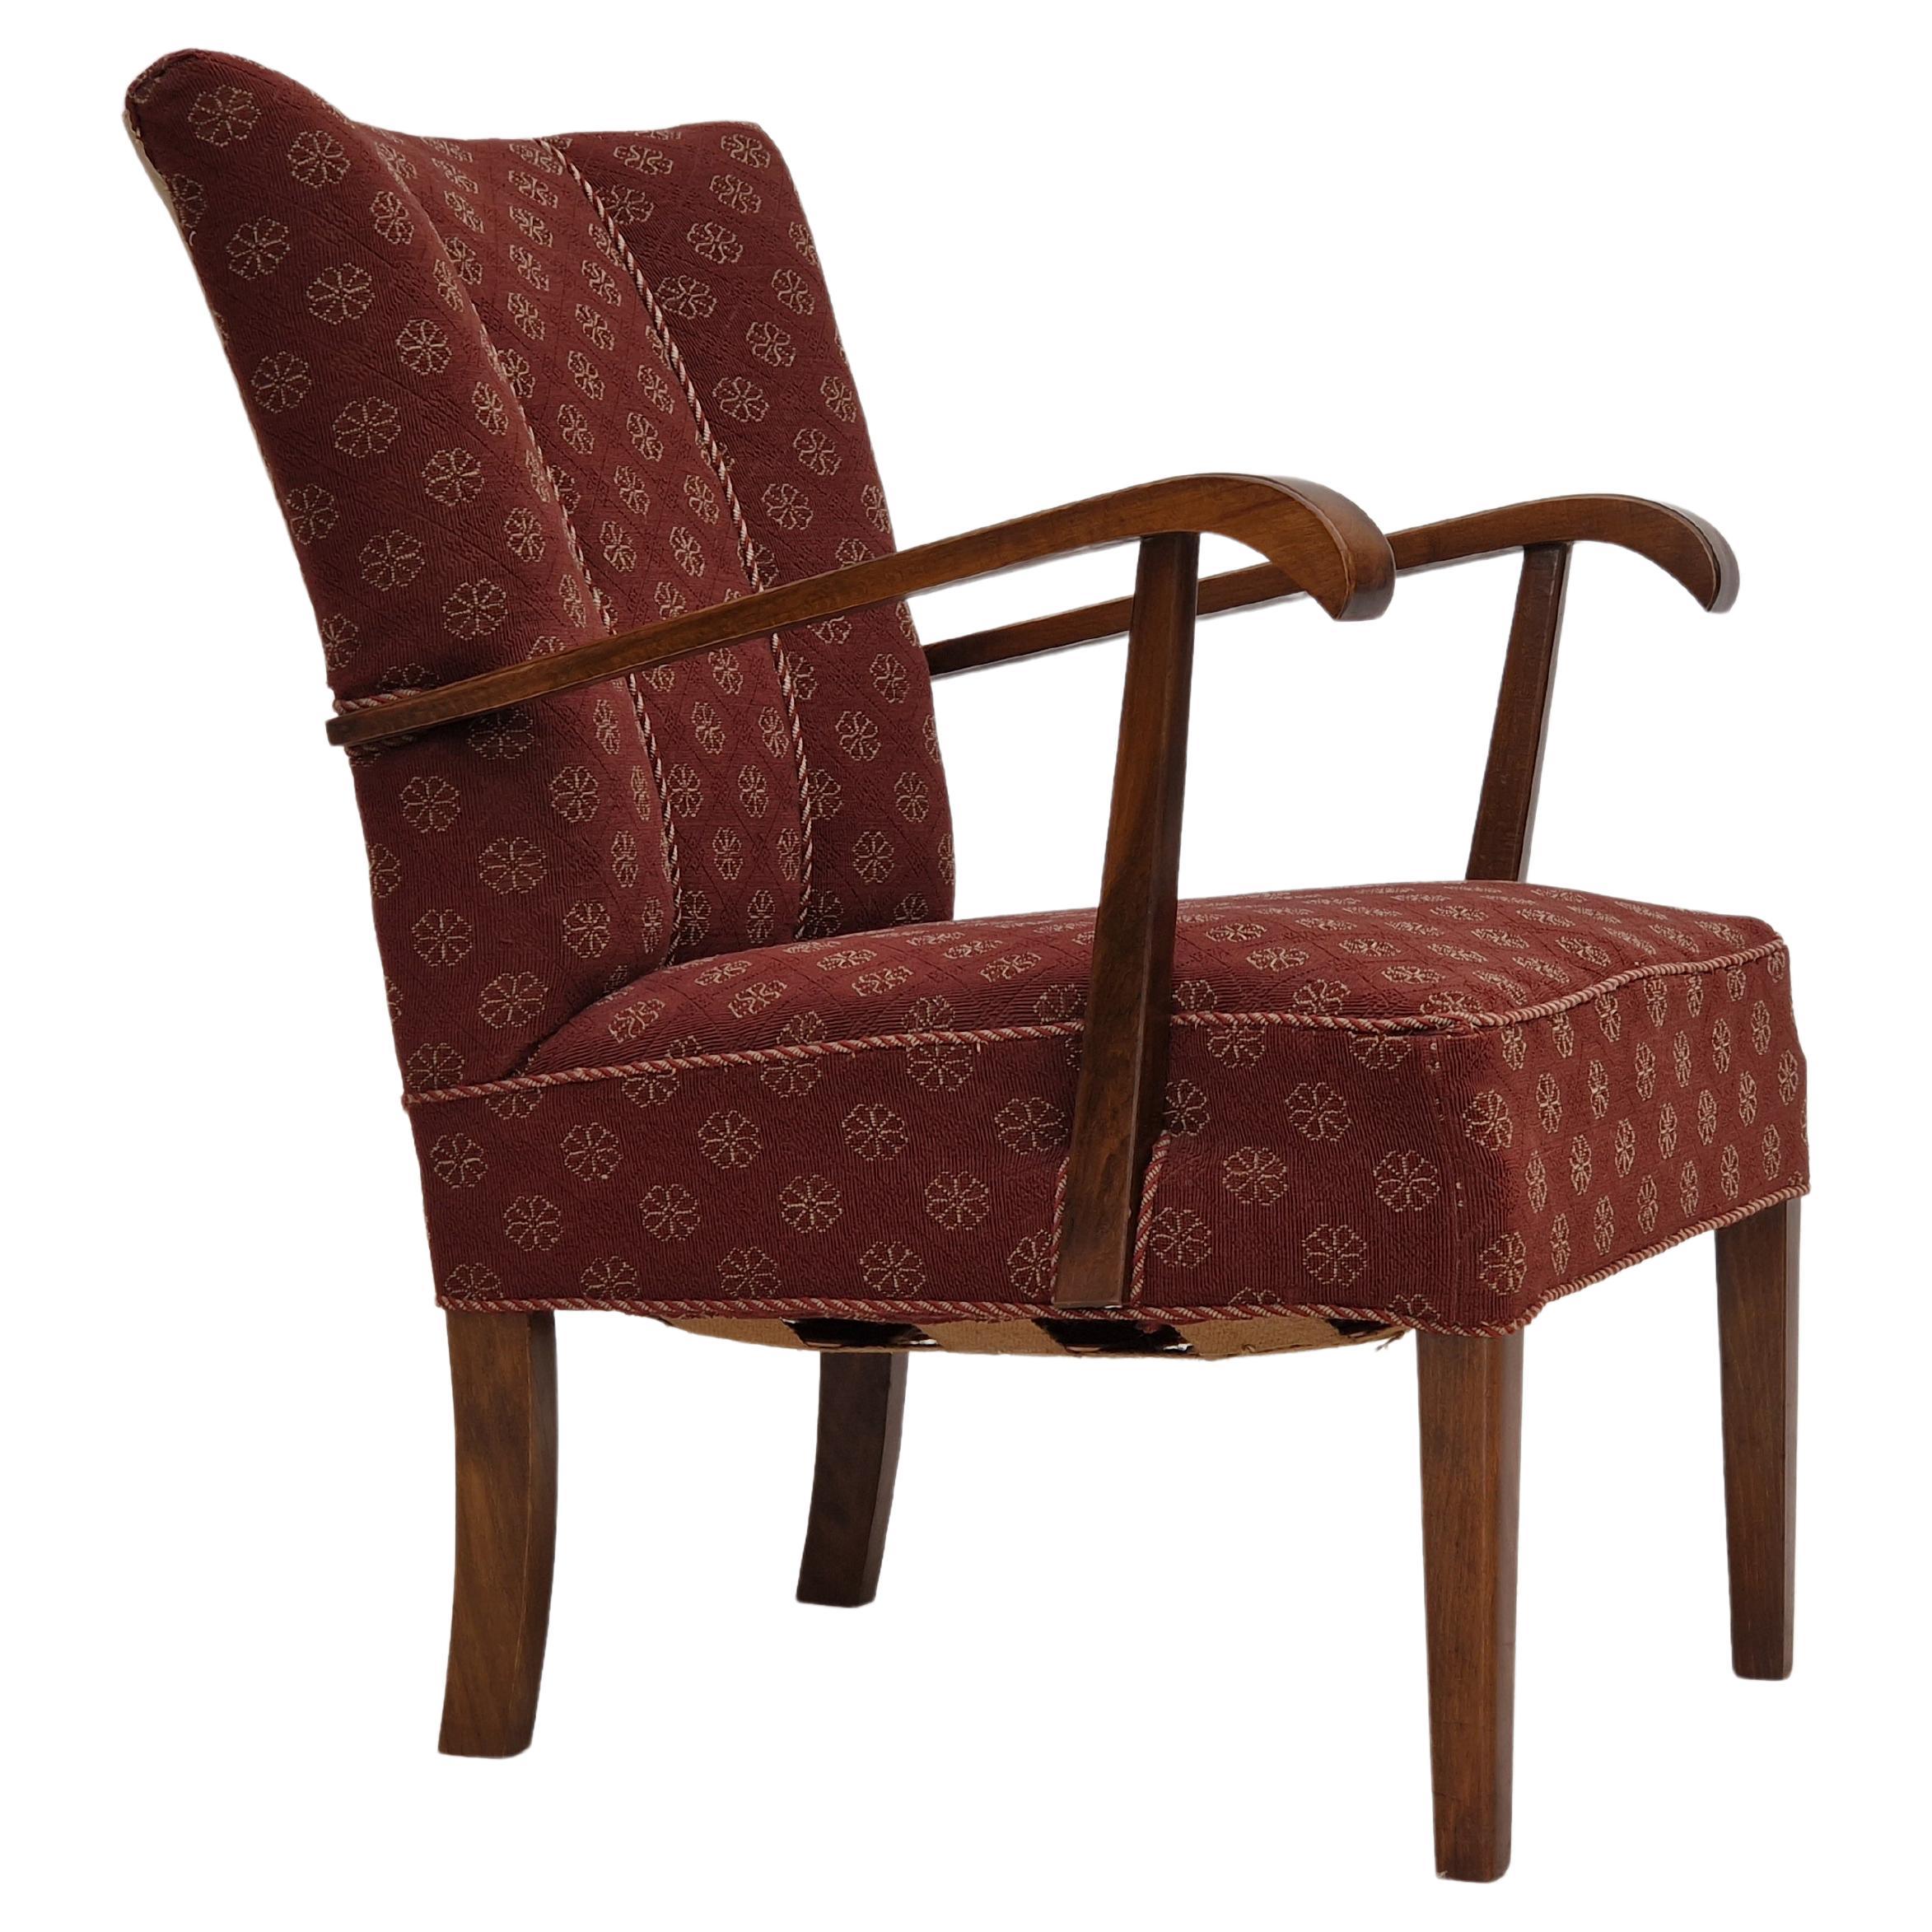 1950s, Danish Design, Original Armchair in Very Good Condition For Sale